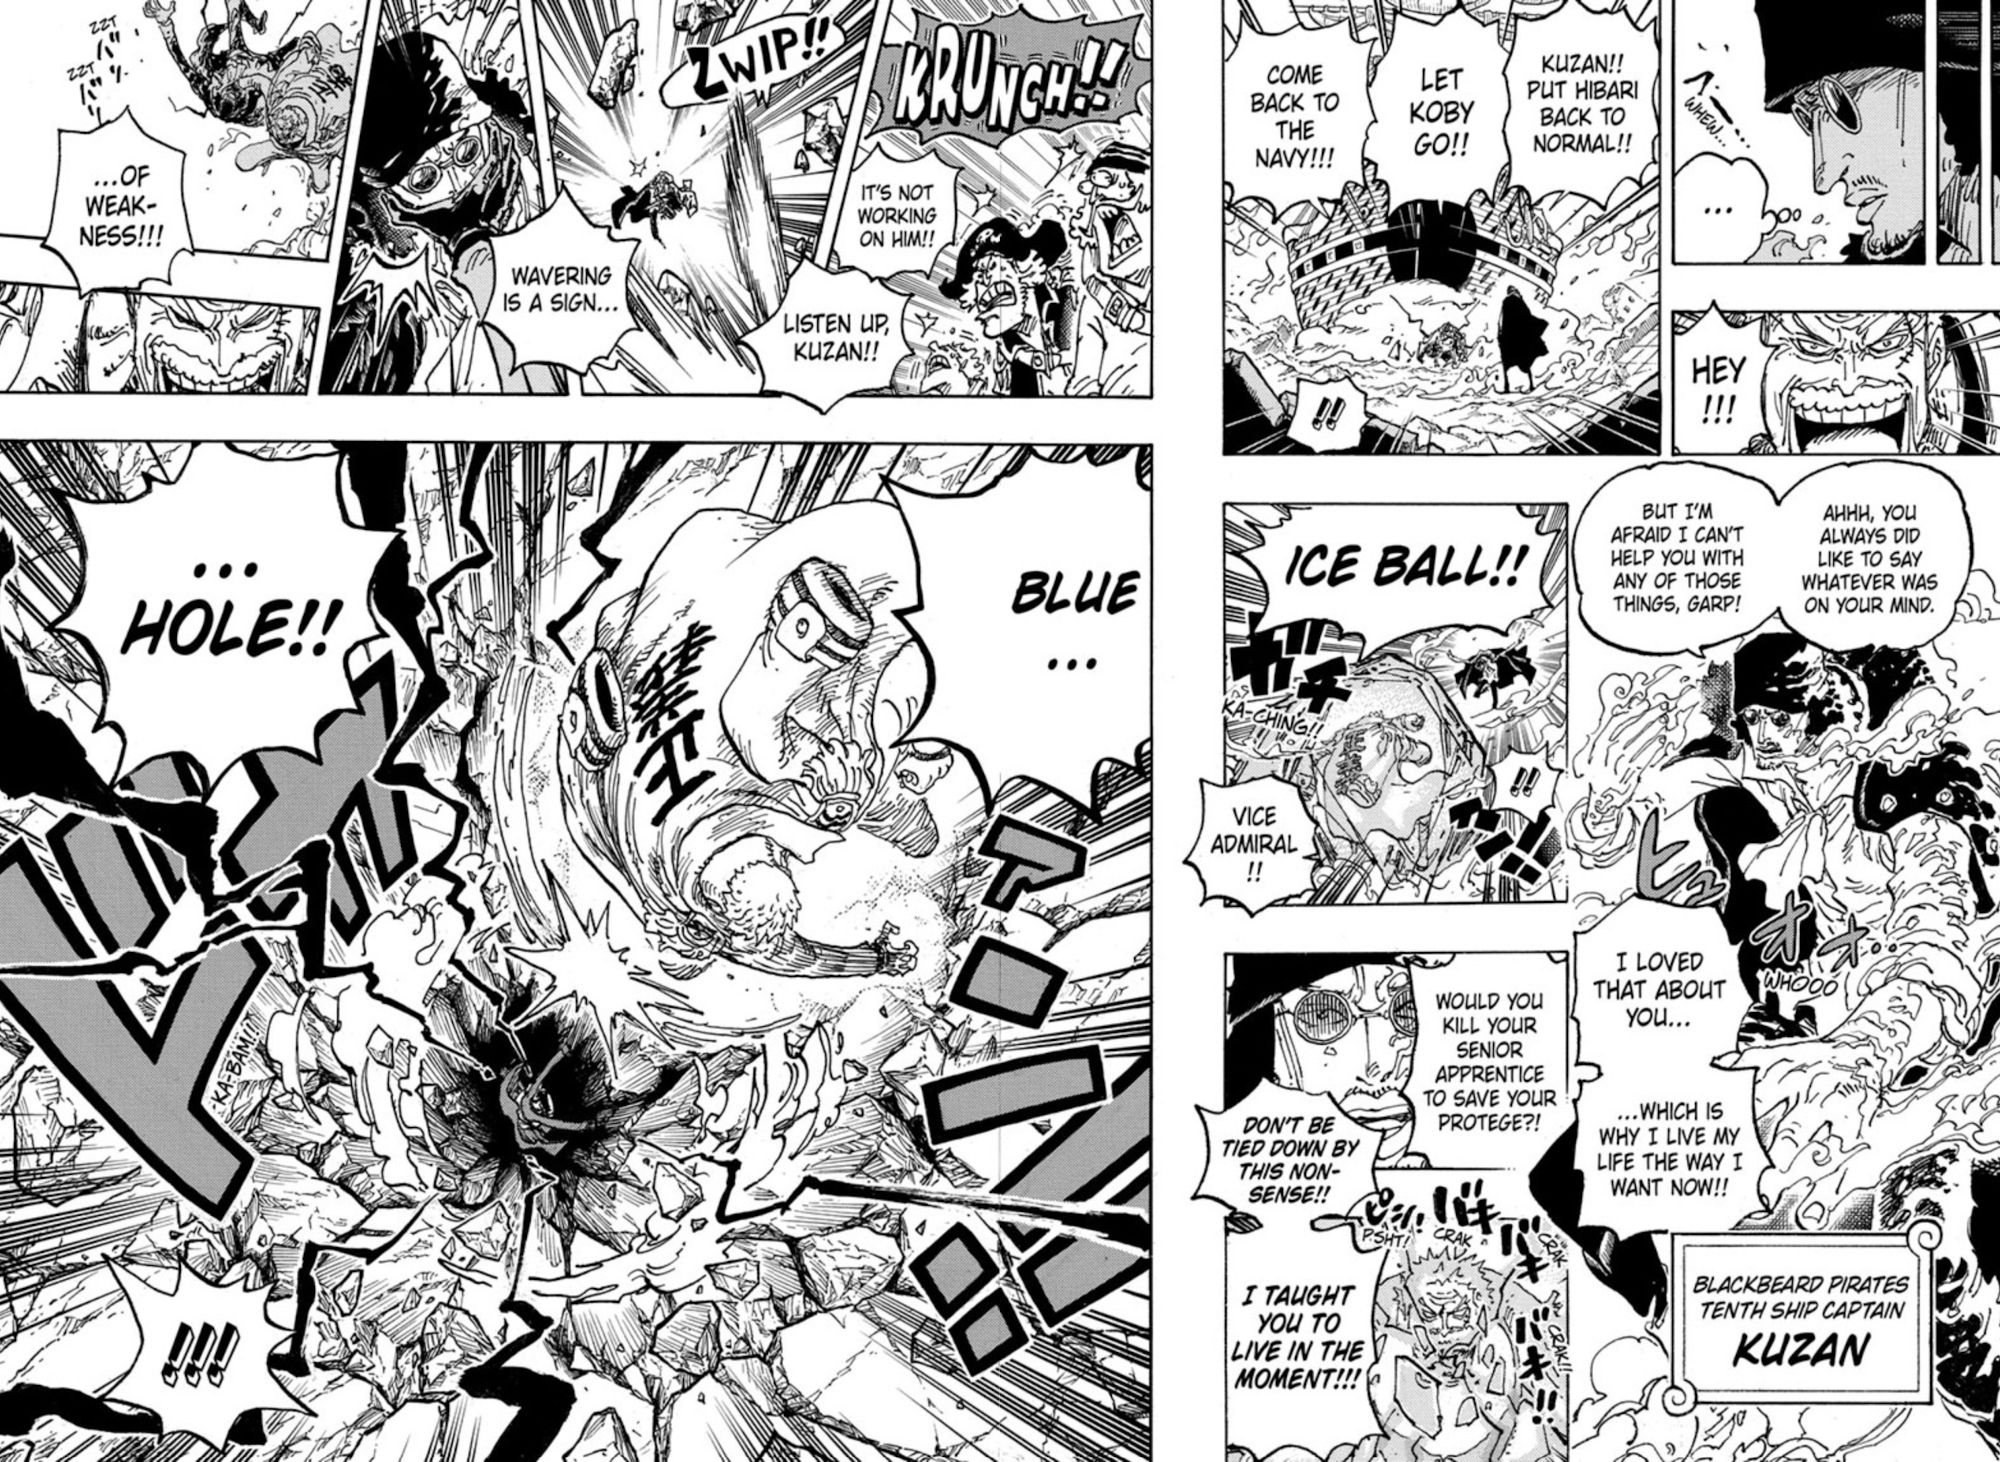 Panel manga dari manga One Piece chapter 1081 menunjukkan Garp dibekukan oleh kekuatan es Kuzan, lalu pecah dan membanting Kuzan ke tanah, menciptakan kawah besar.